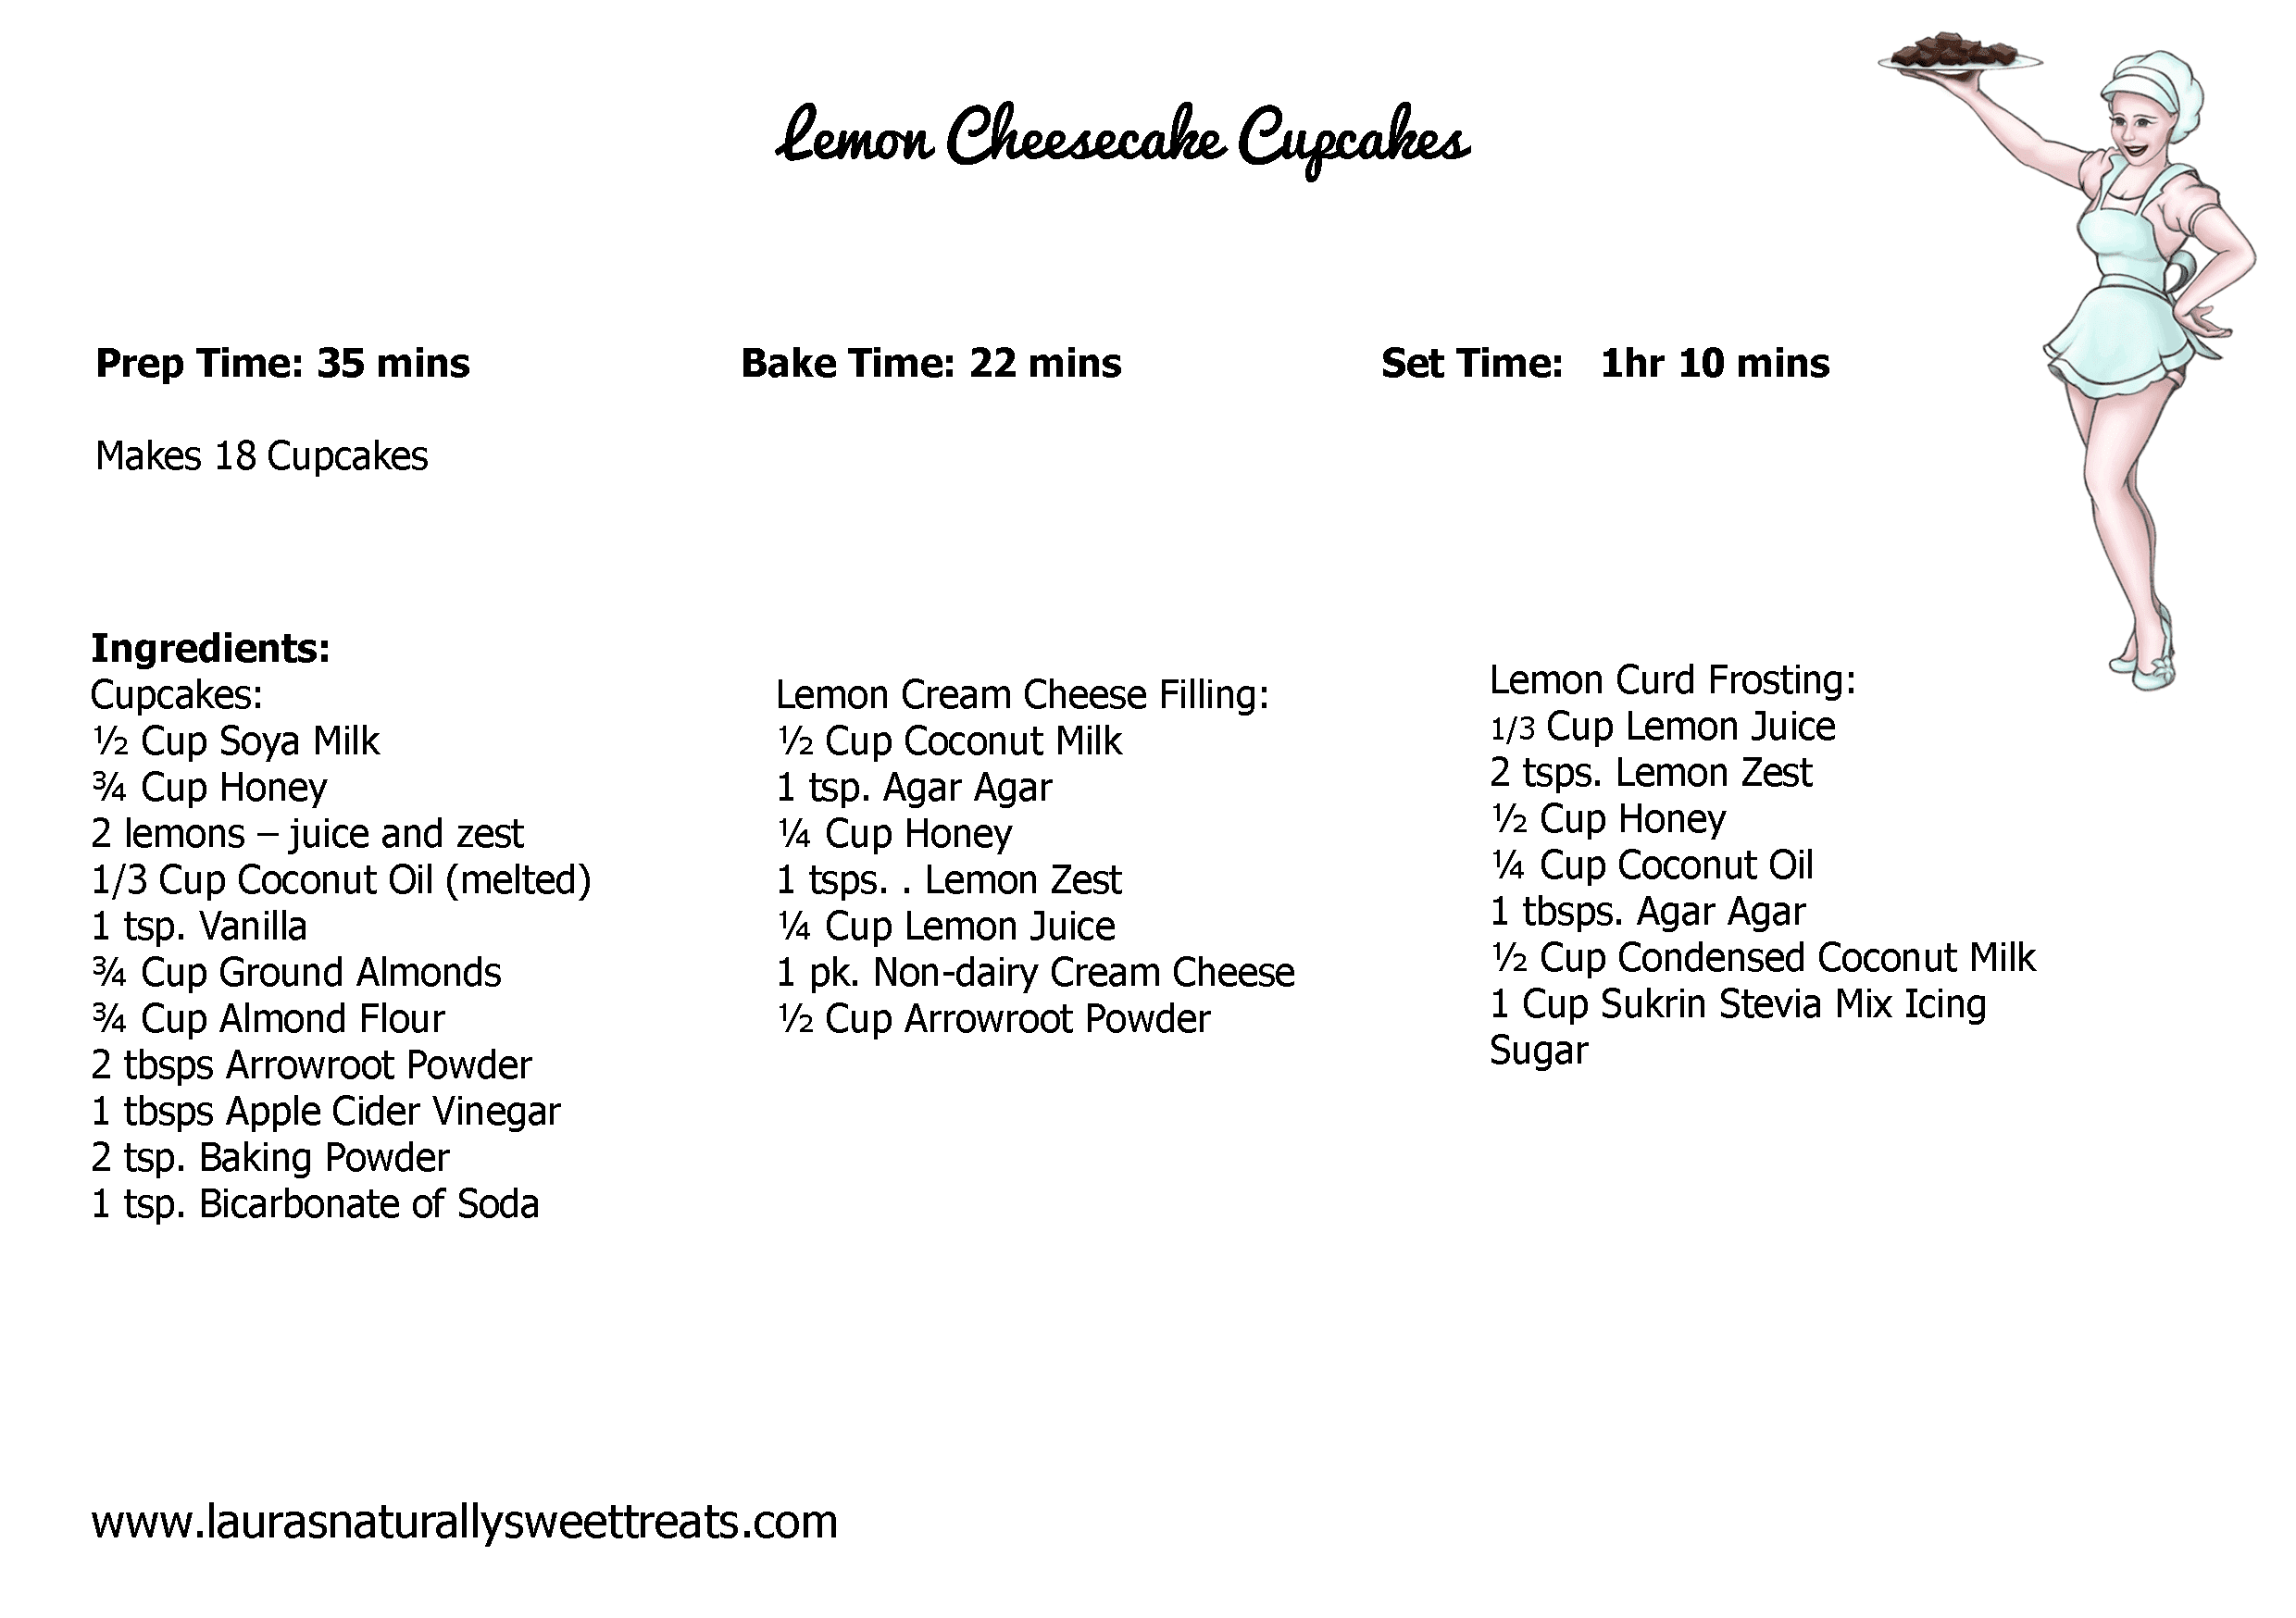 lemon-cheesecake-cupcakes-recipe-card-0001